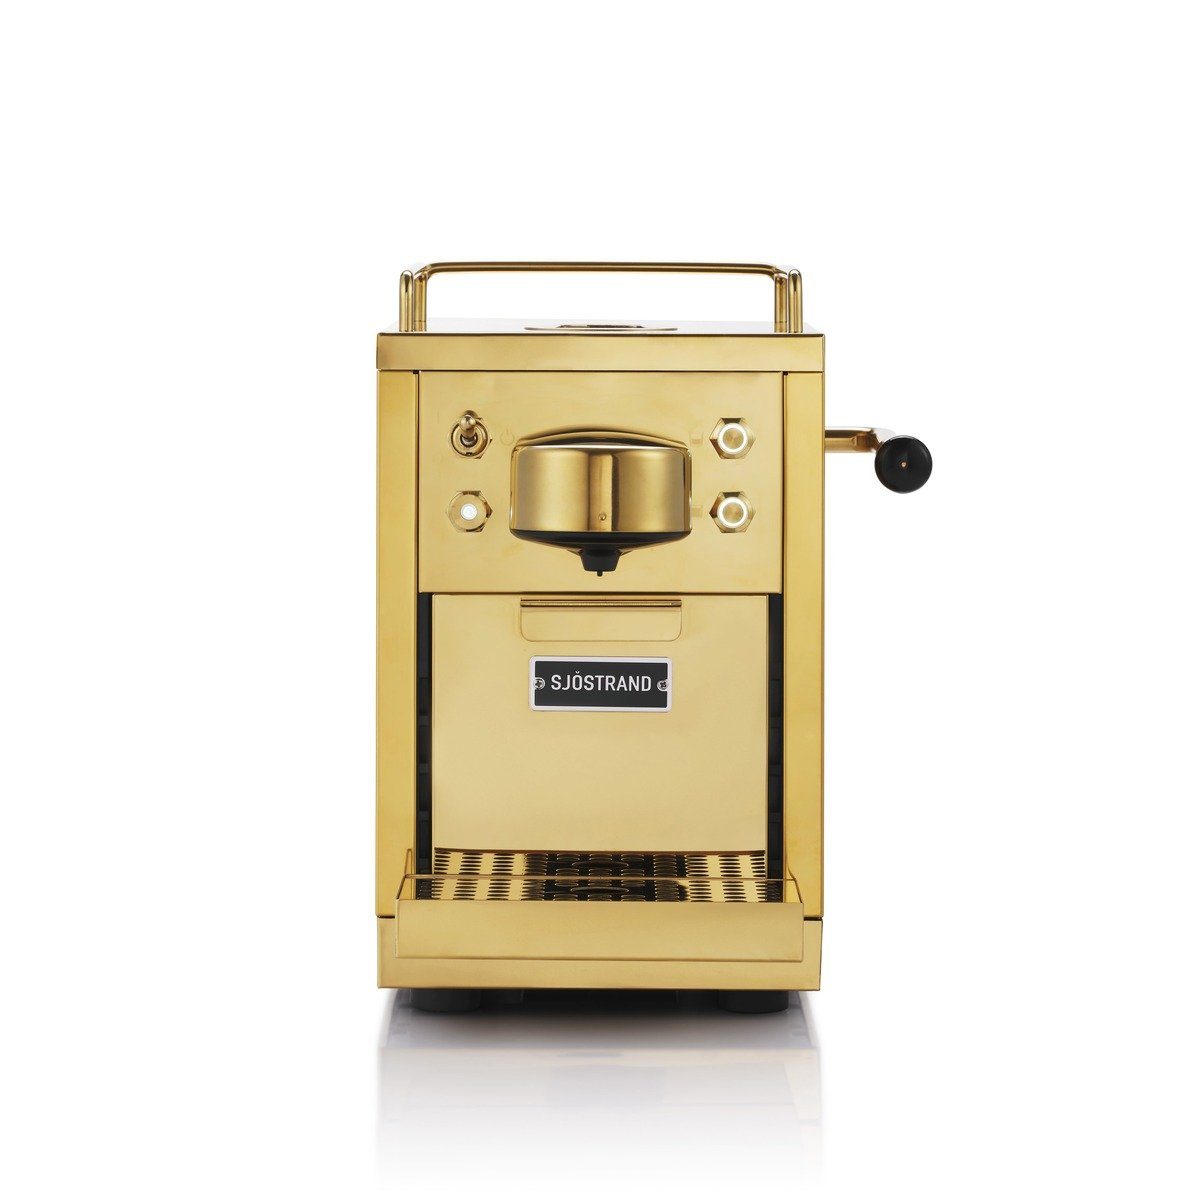 Capsule Espresso Kapselmaschine Brass Sjöstrand Machine